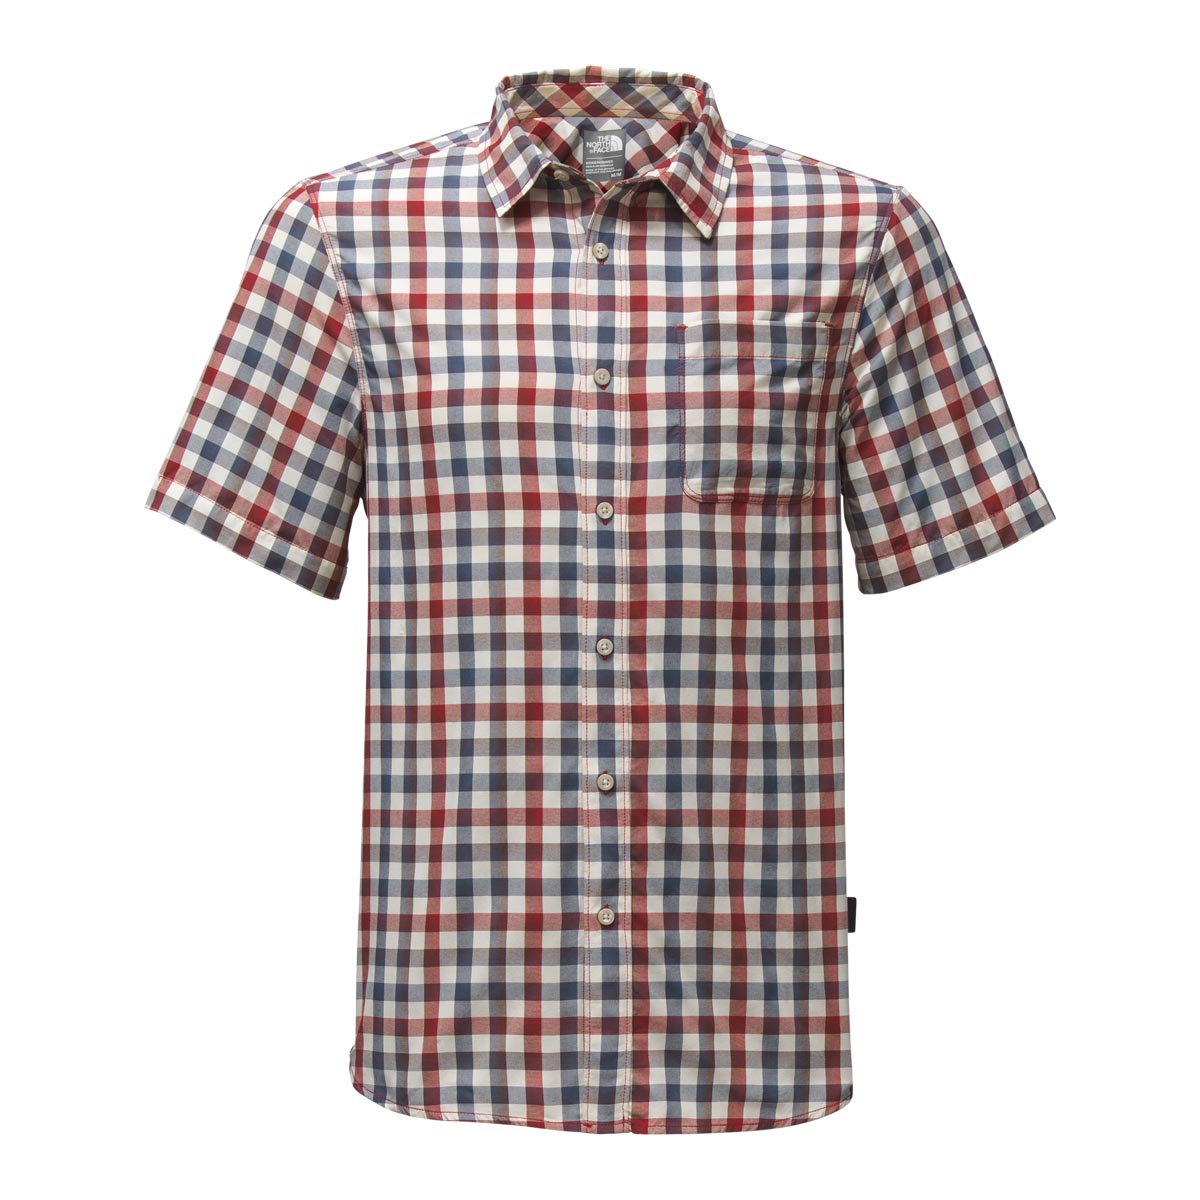 The North Face Men's Short Sleeve Getaway Shirt